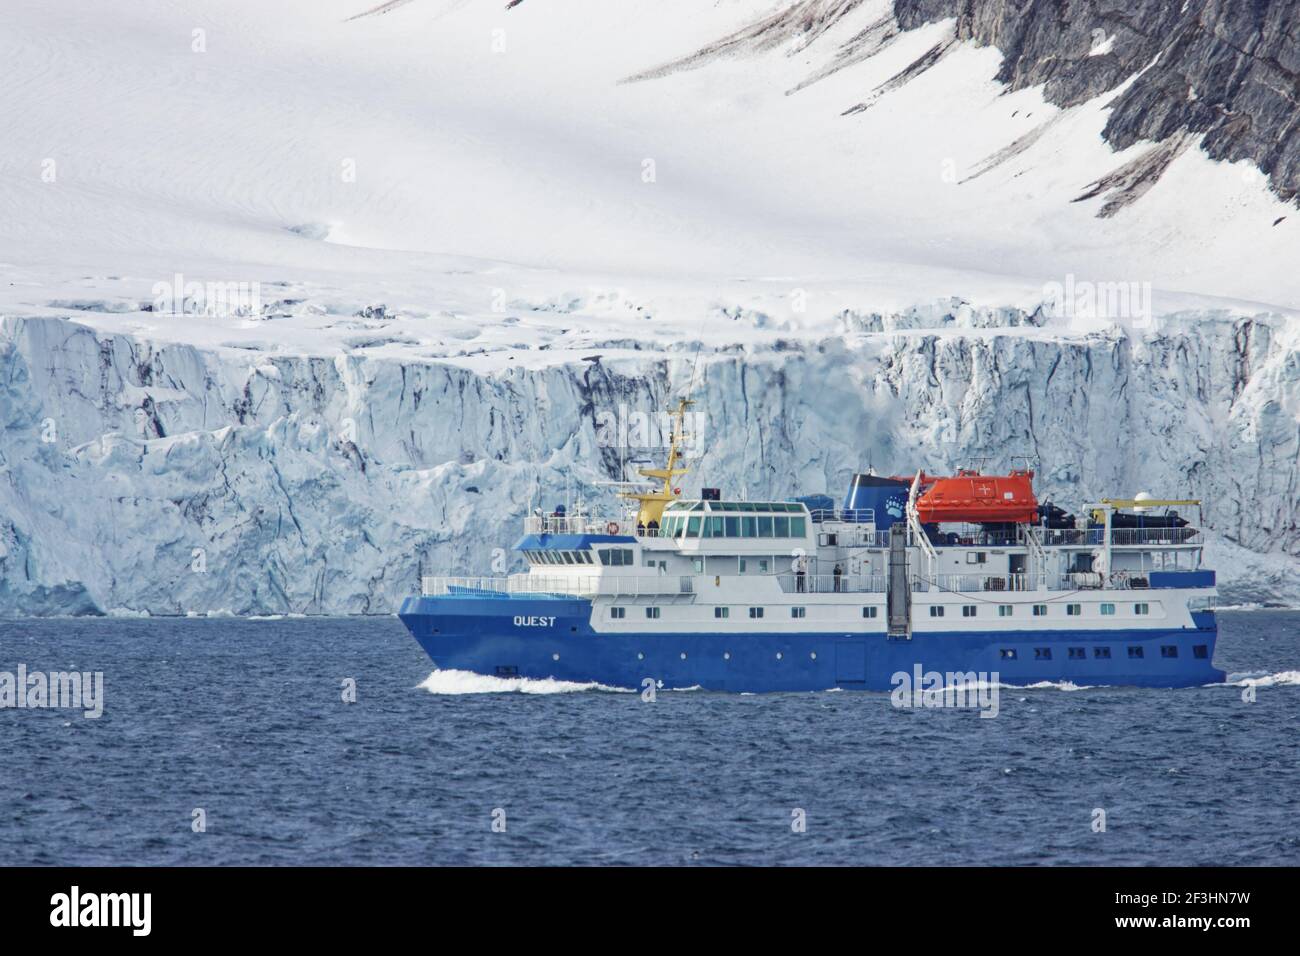 Quest - Tourist Ship & GlacierSvalbard (Spitsbergen) LA003908 Stock Photo